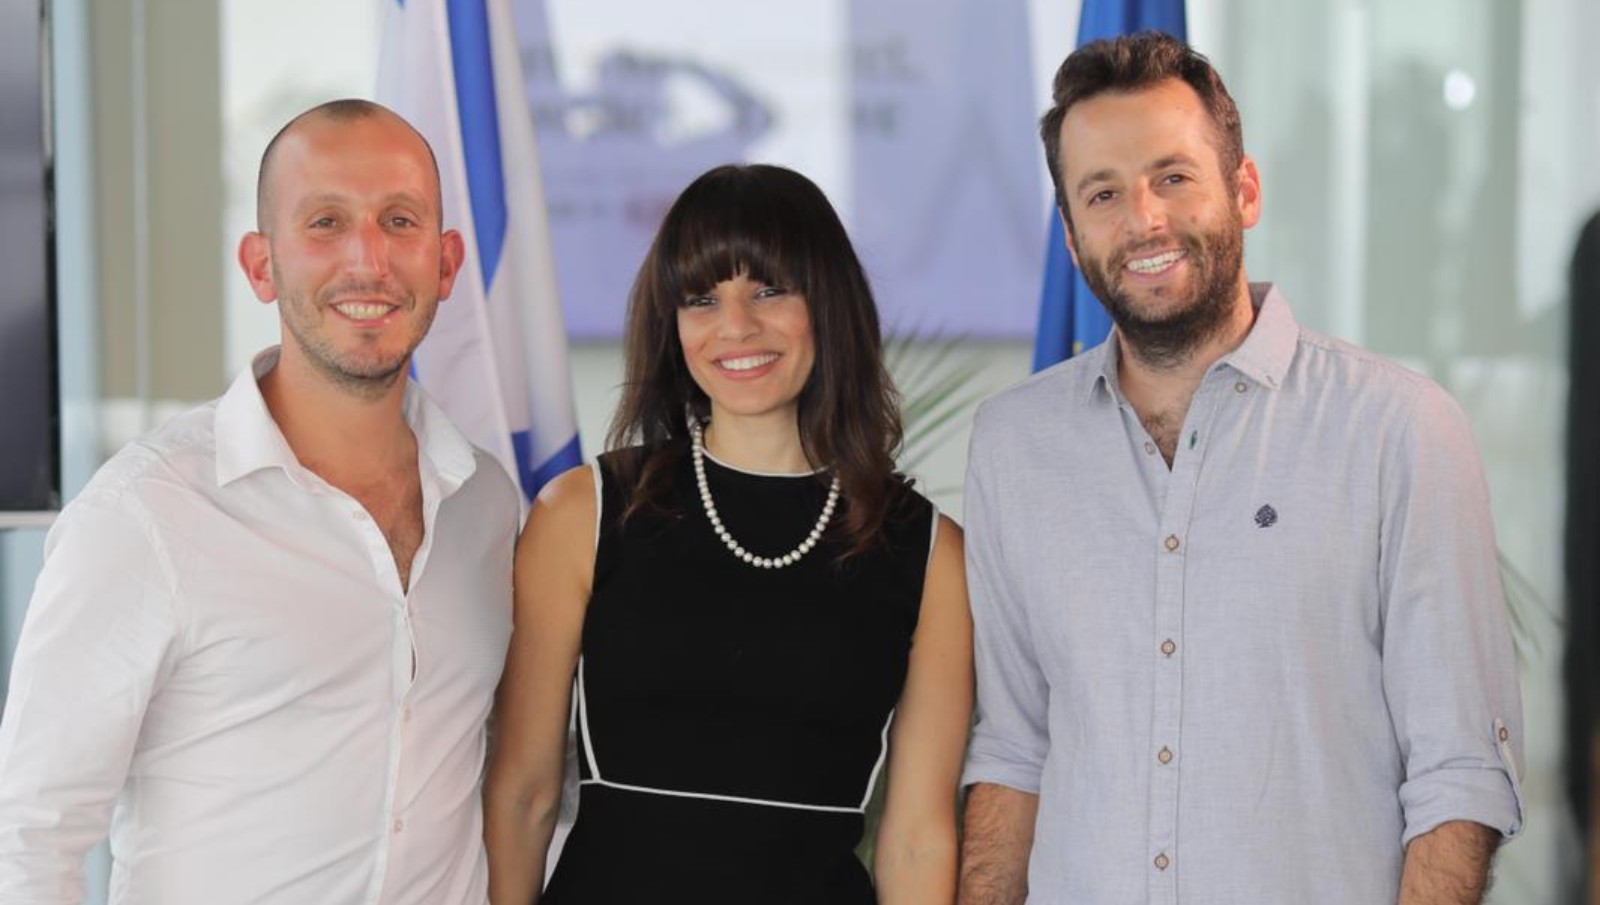 Yotam Tzuker, Adi Barel and Yoni Levenfeld, editors of a new report on Israeli startups in Europe. Photo by Idan Canfi